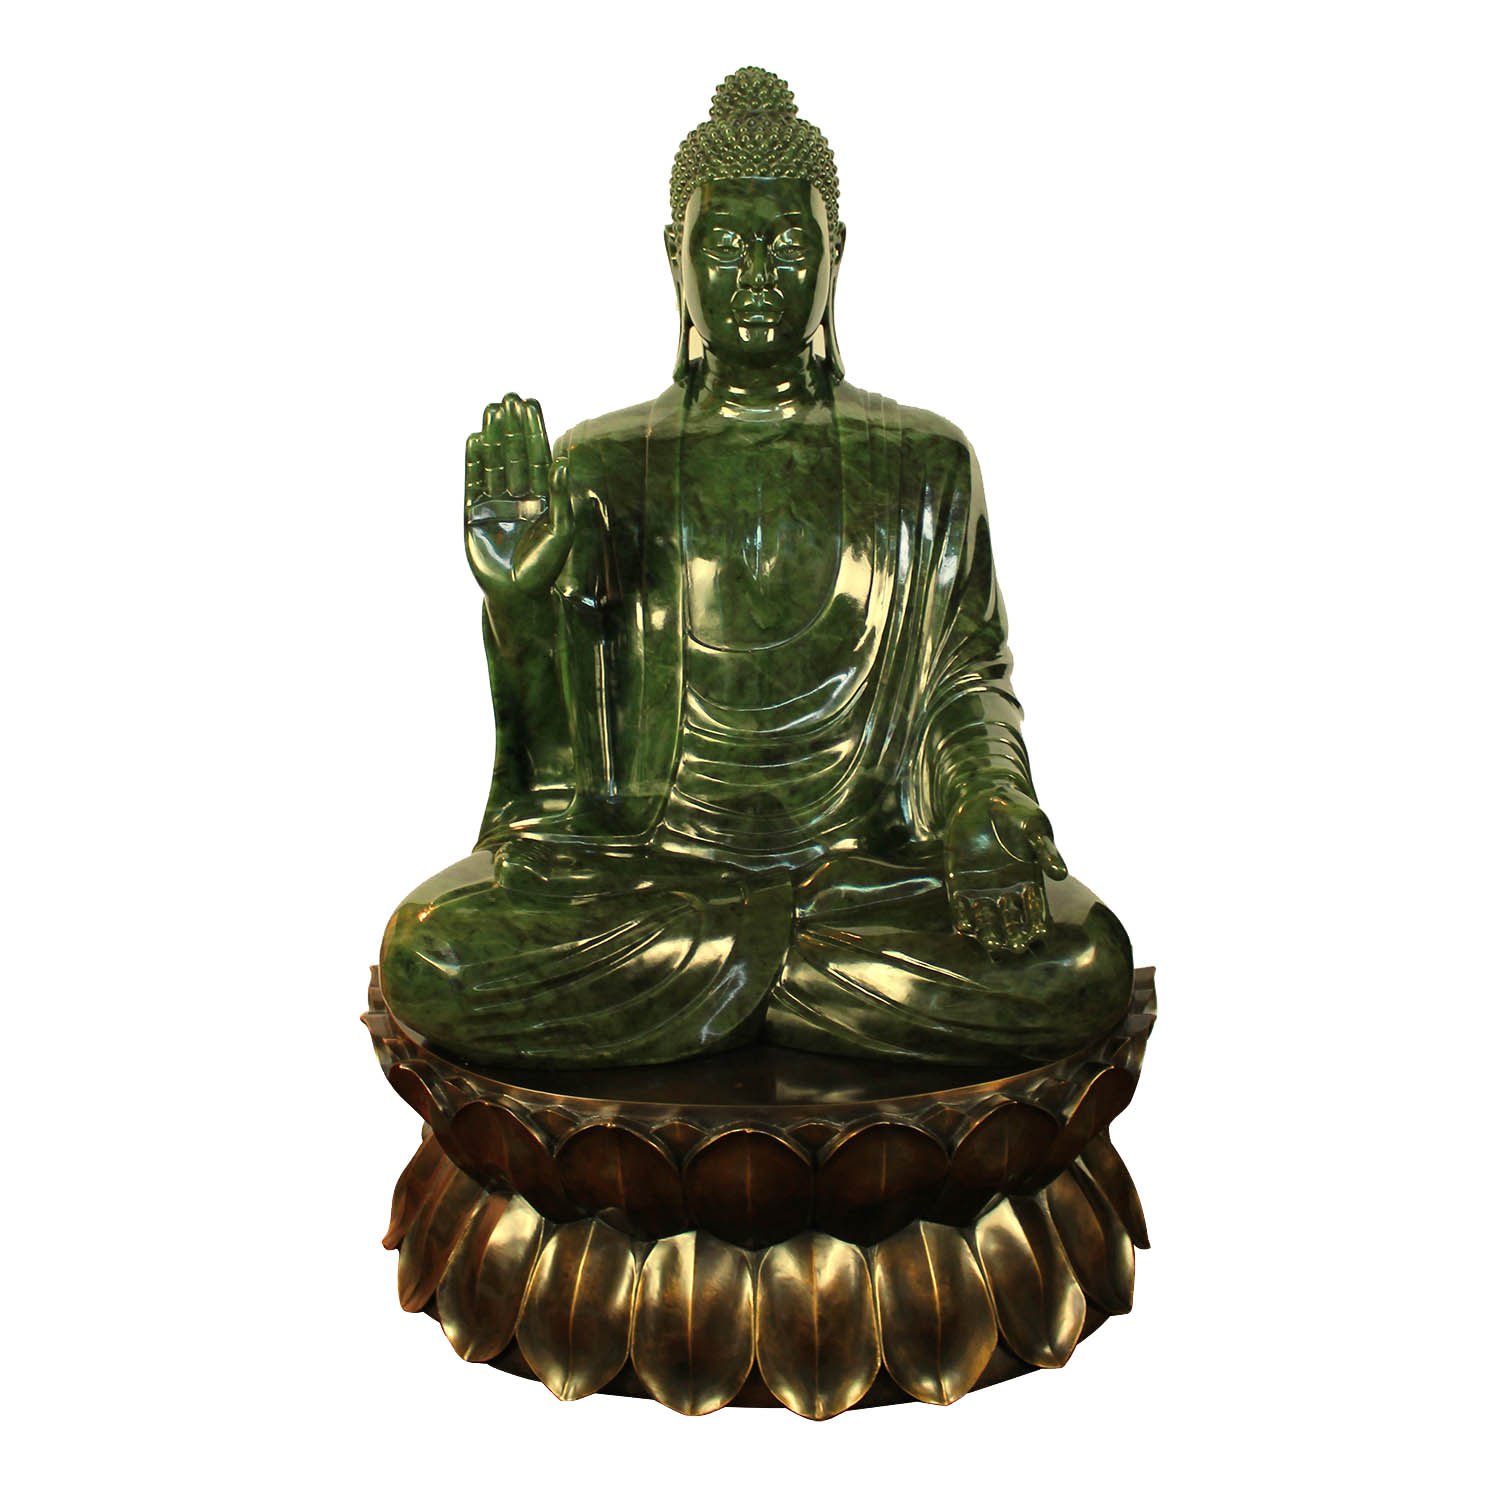 Lyle Sopel (Canadian born 1951) ’Jade Buddha on Bronze Lotus Throne, 2003’